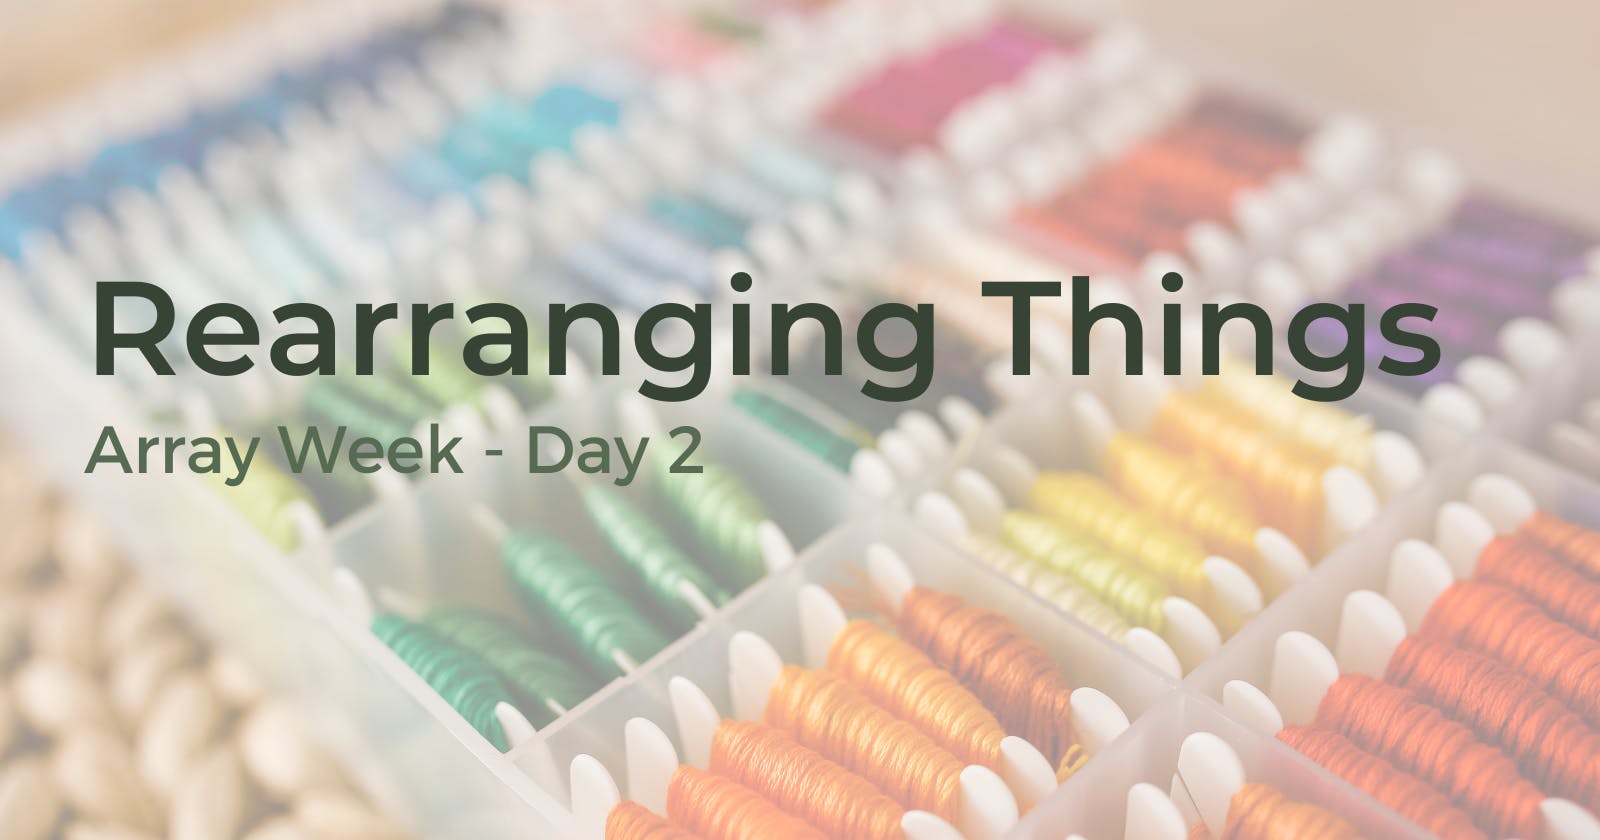 Array Week Challenge - Day 2